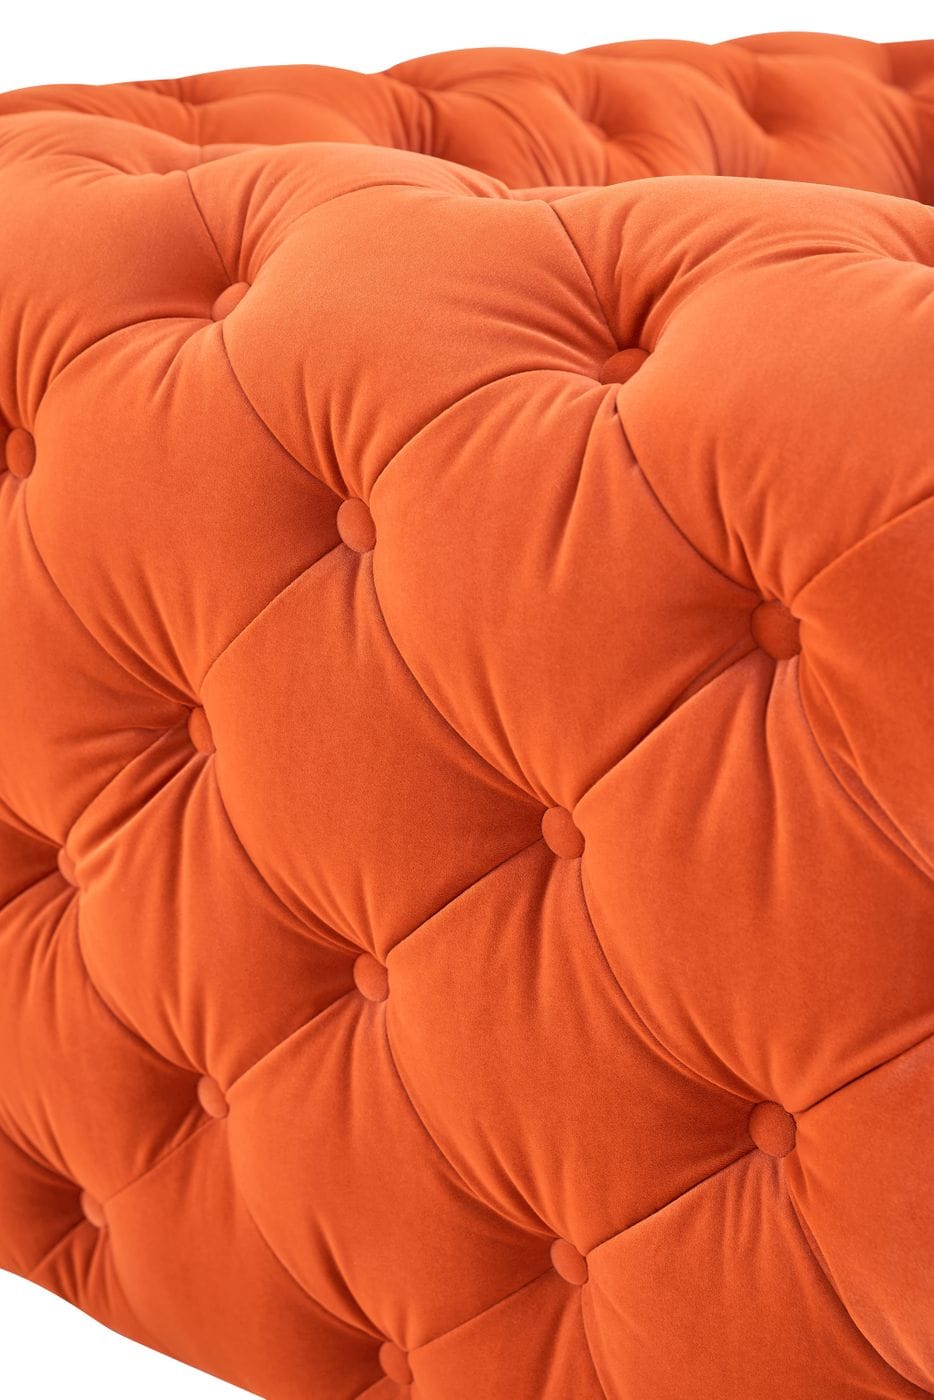 Divani Casa Delilah - Modern Orange Fabric Loveseat-Loveseat-VIG-Wall2Wall Furnishings